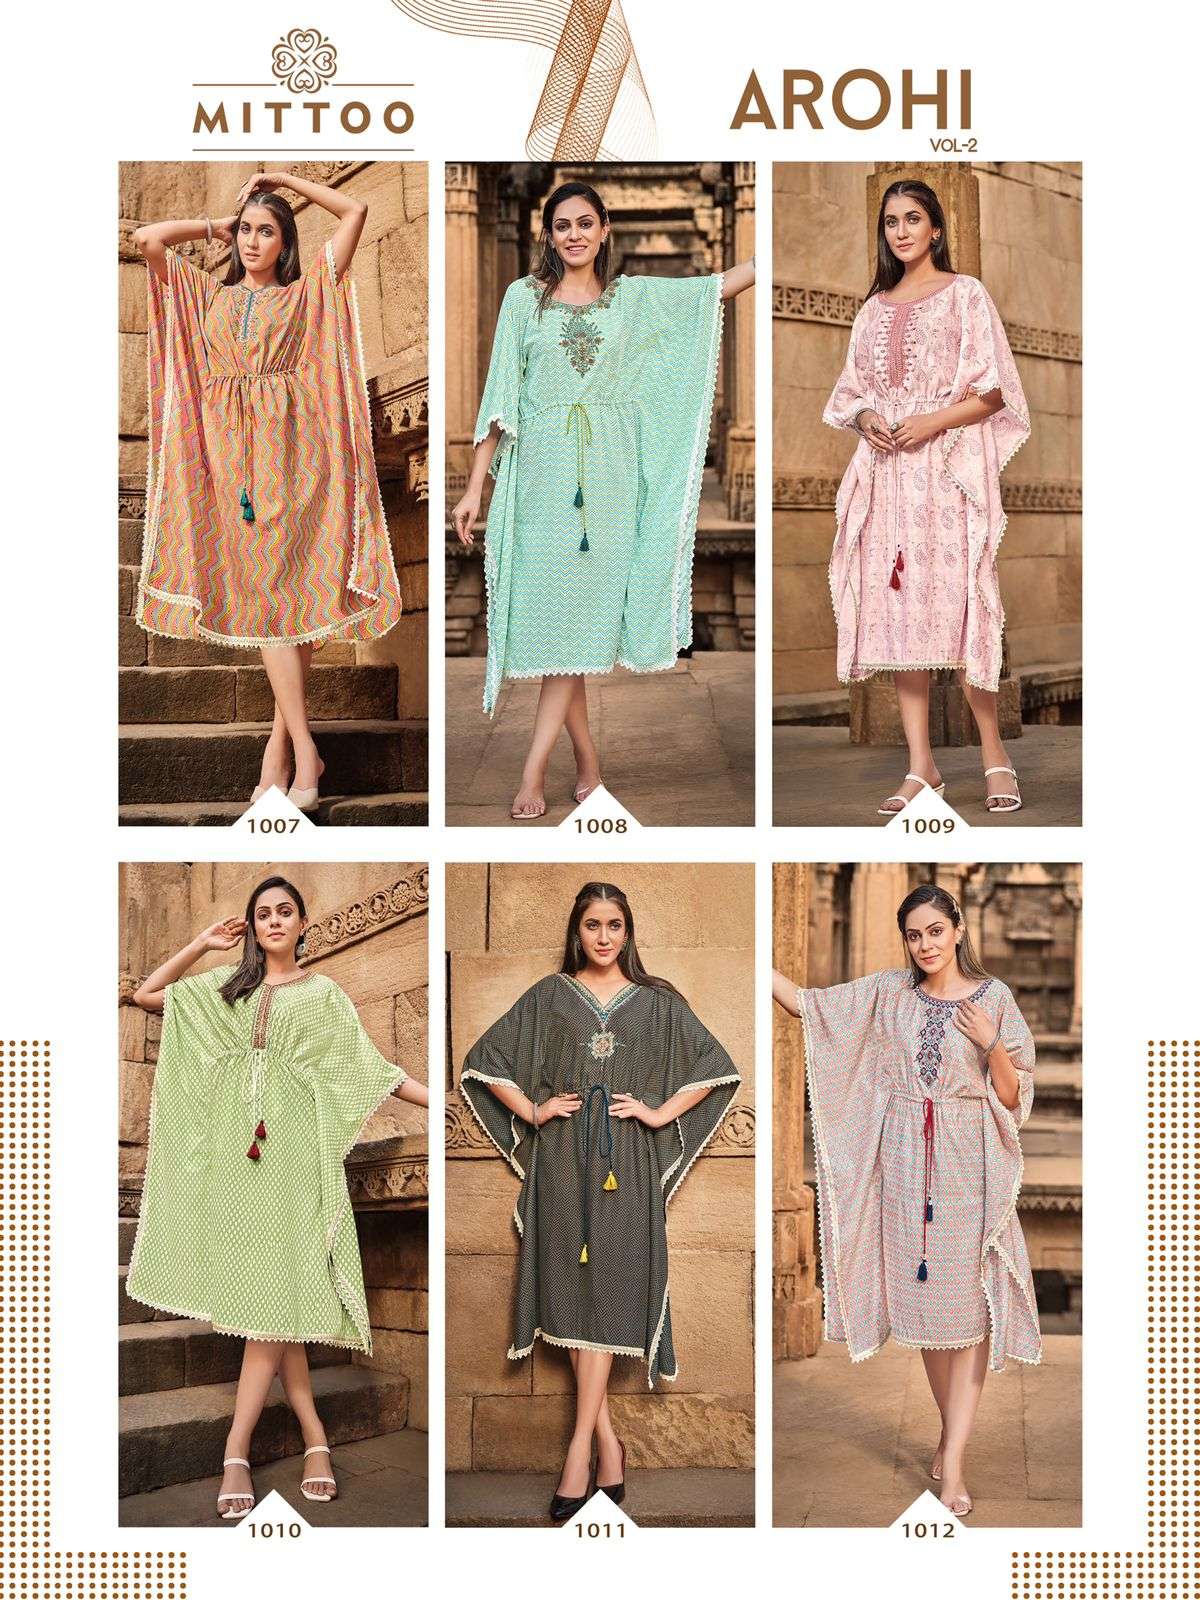 mittoo arohi vol 2 reyon printed stylish kaftan collection online shopping surat 